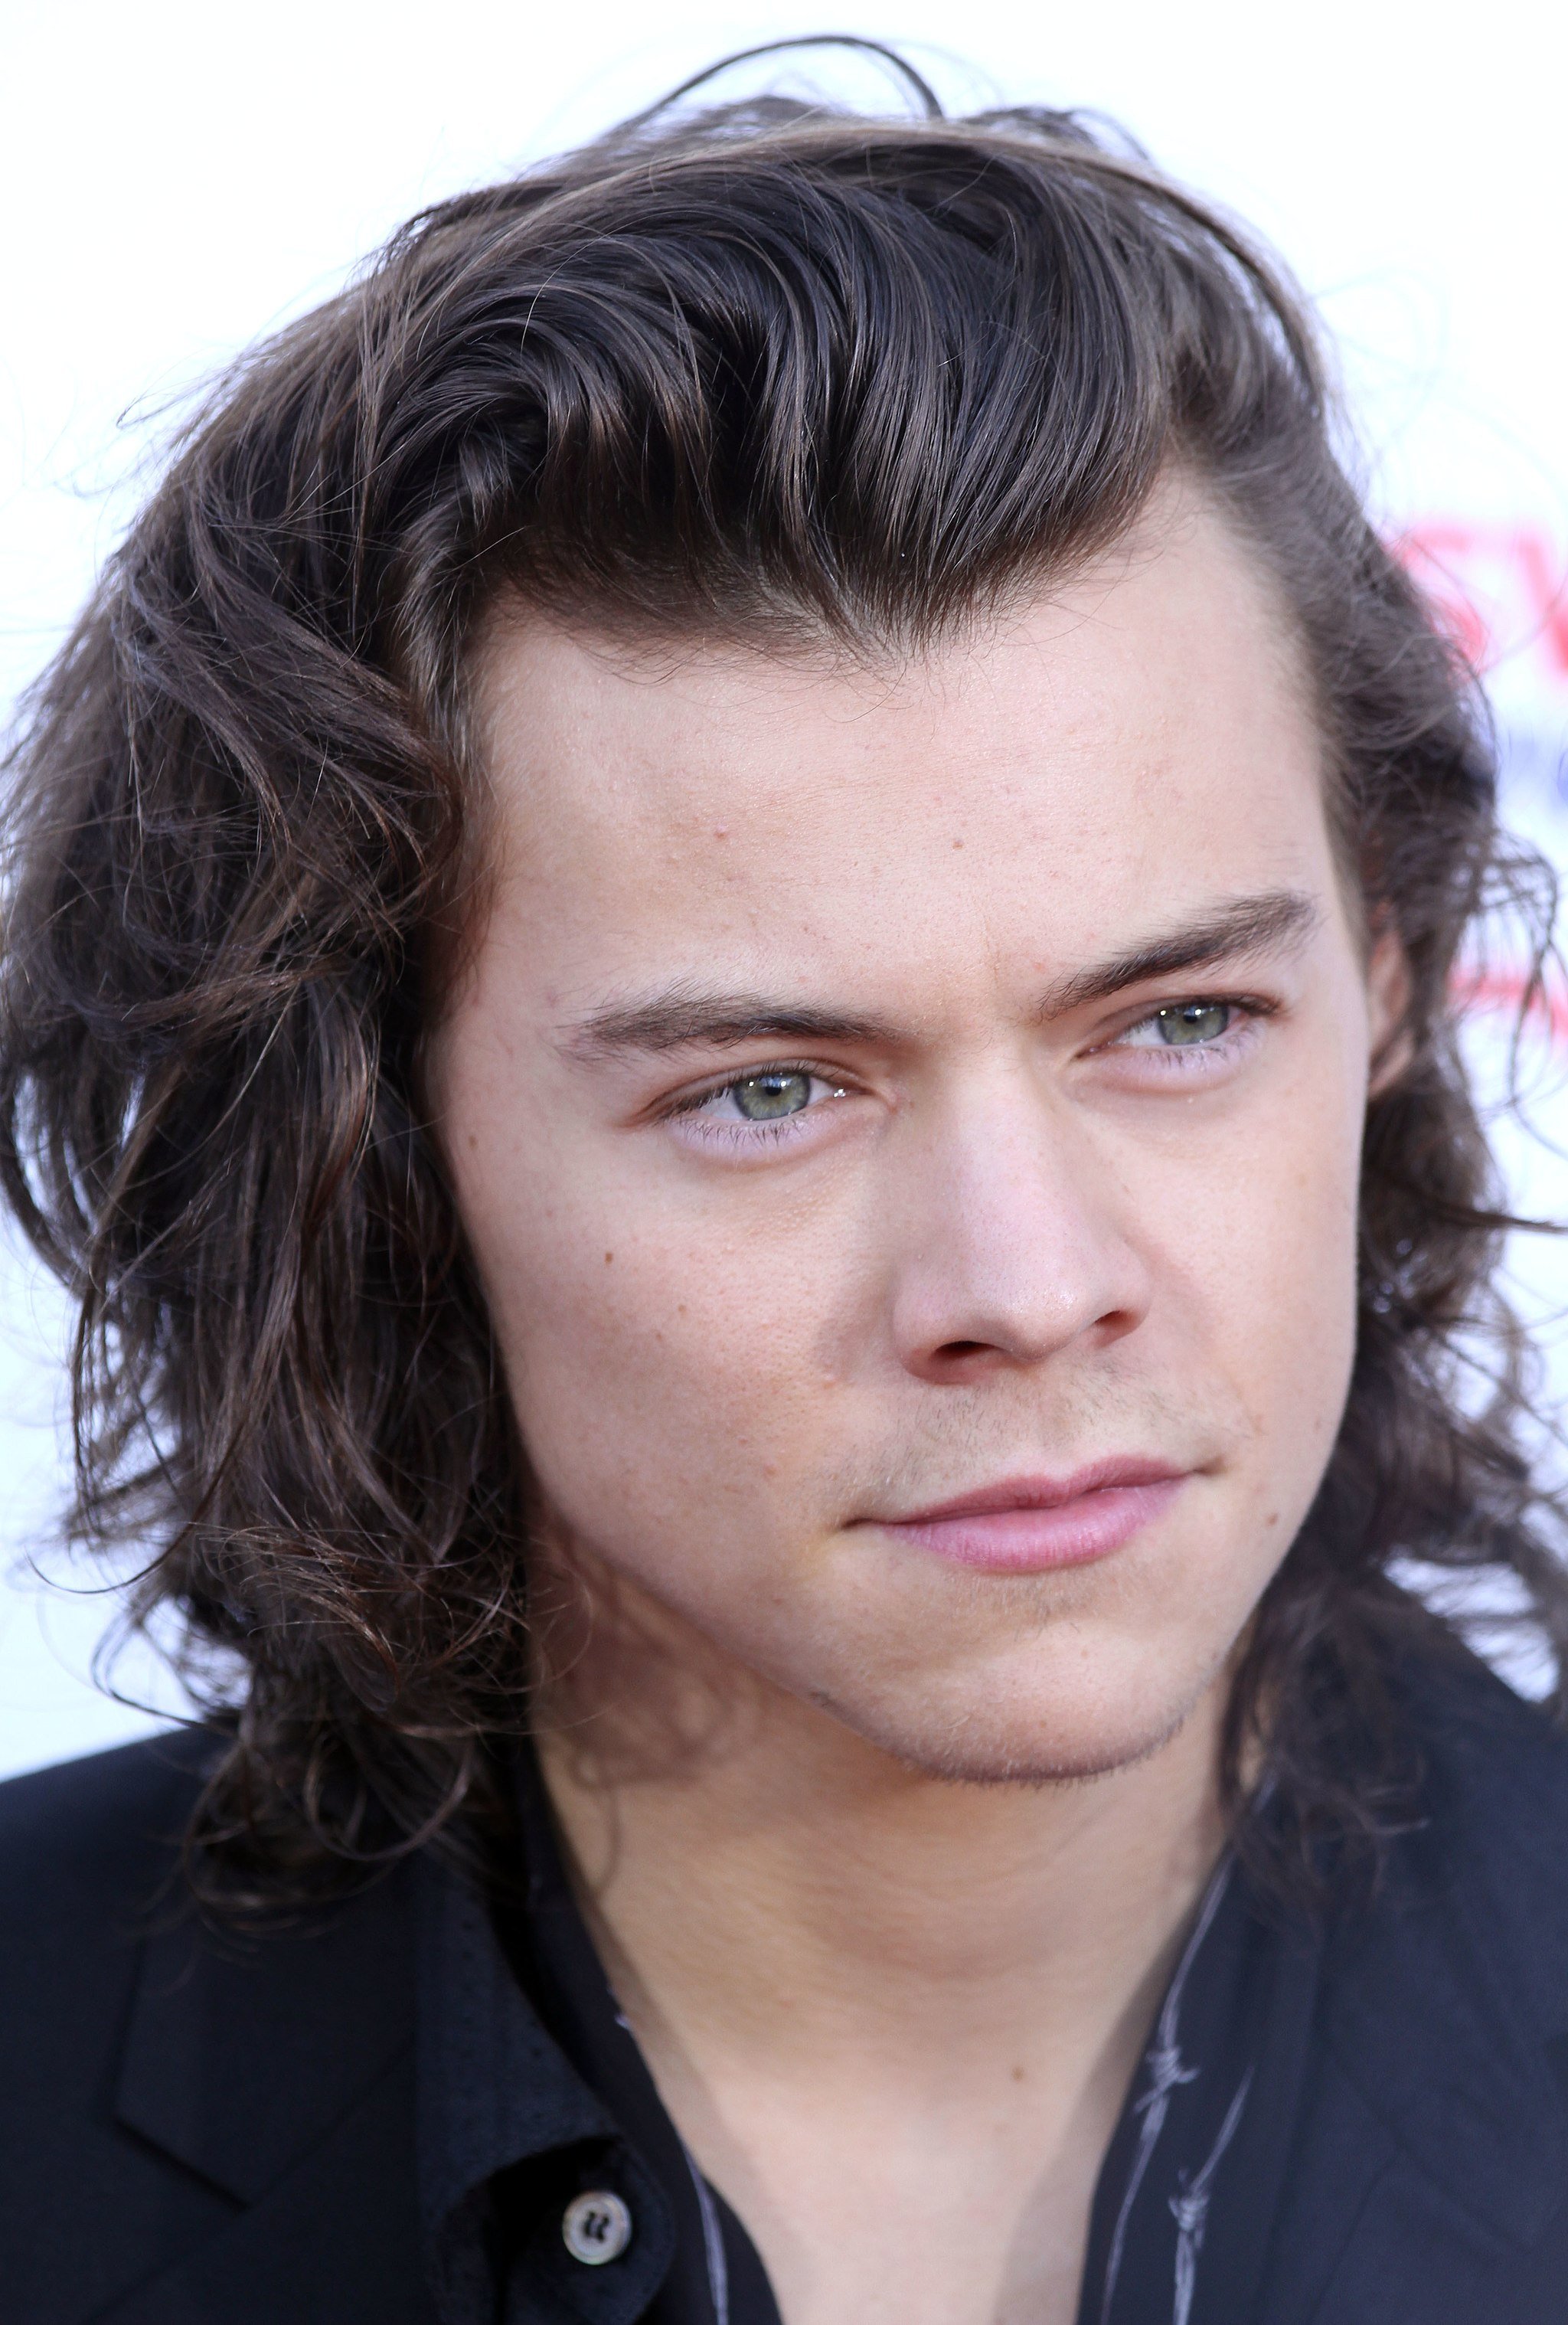 El cantant de One Direction Harry Styles arriba al Palau Sant Jordi